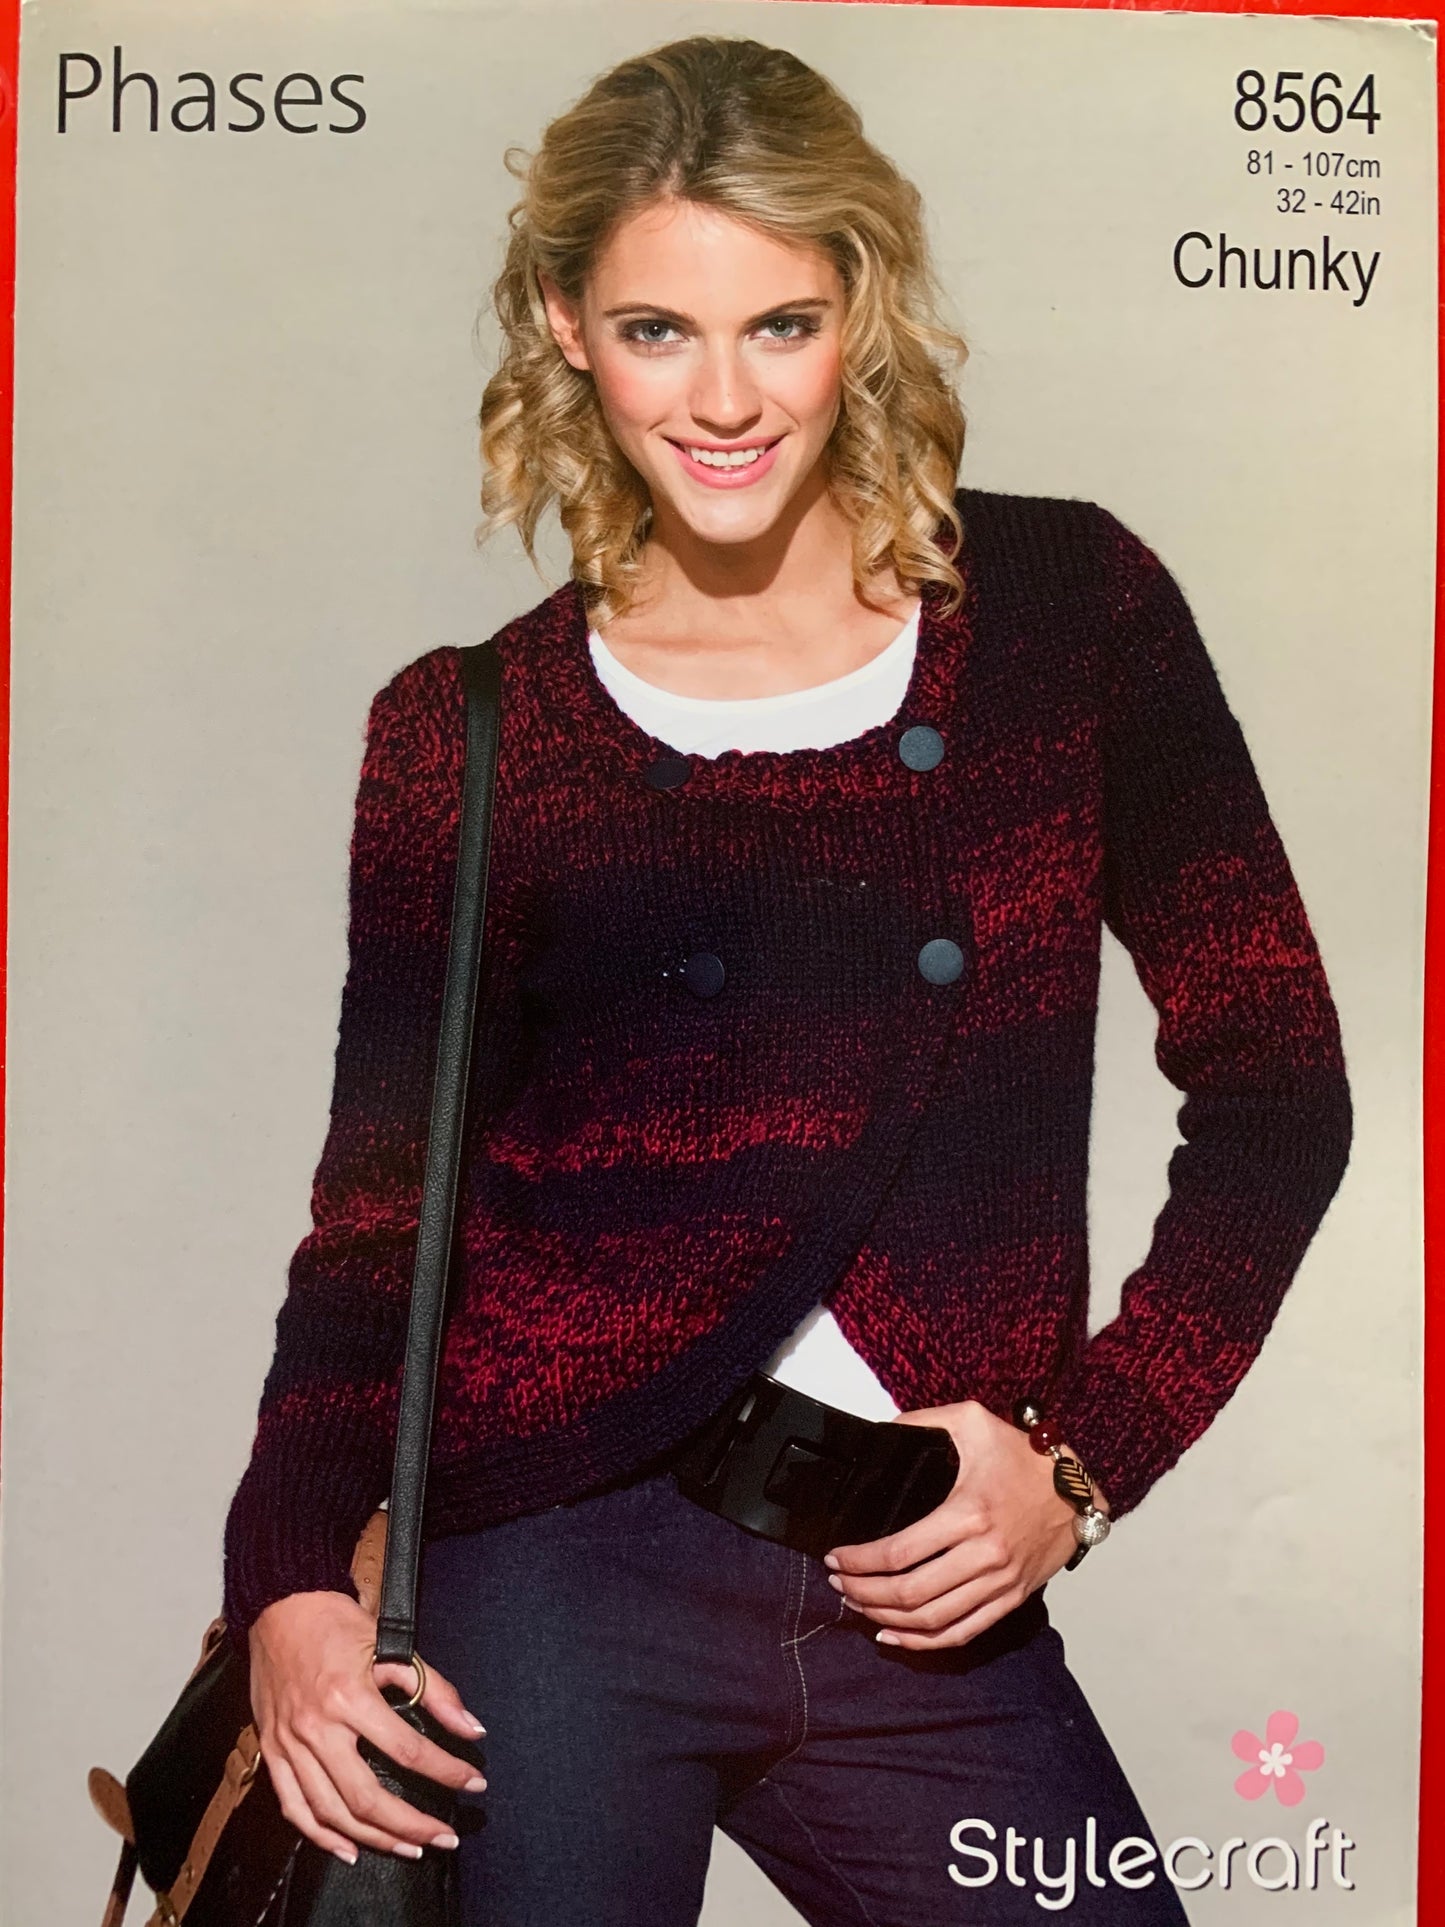 8564 Stylecraft Phases Chunky ladies jacket knitting pattern